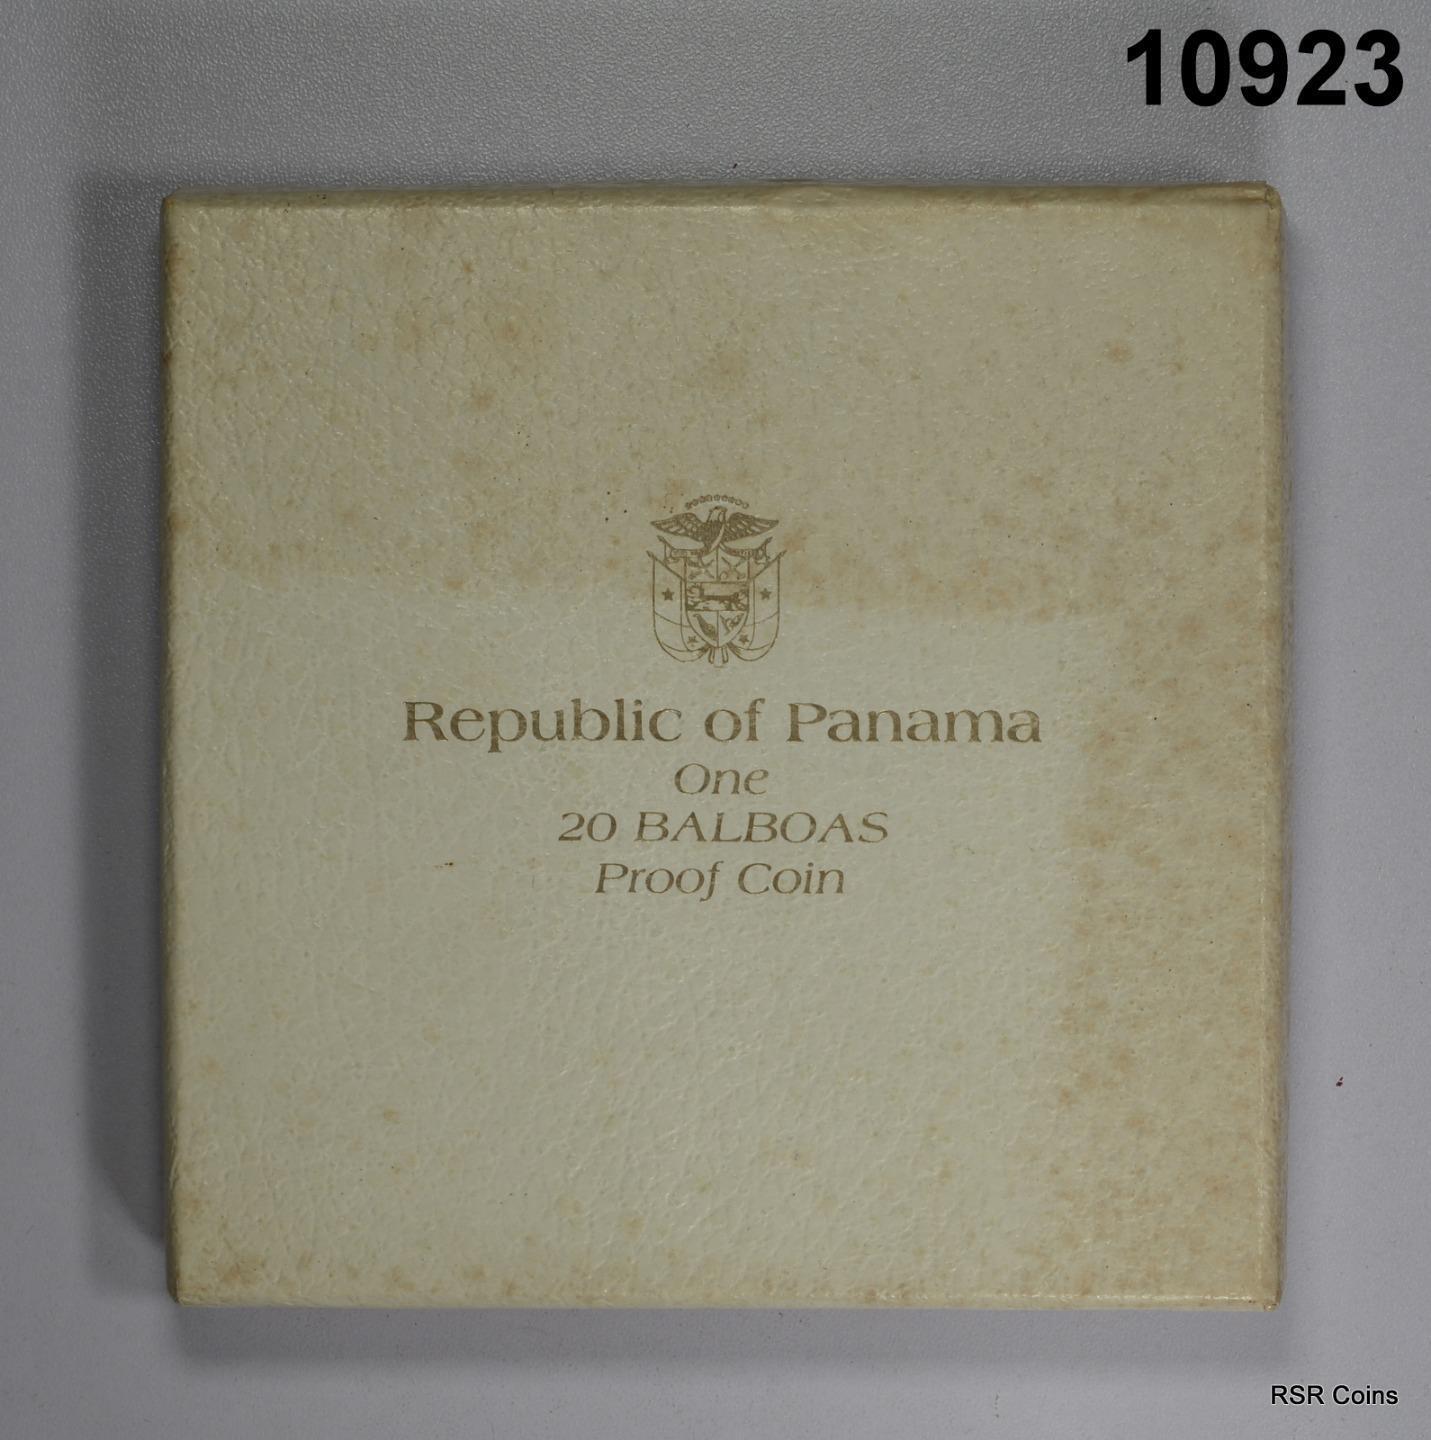 1973 PANAMA 20 BALBOAS PROOF COIN! 2000 GRAINS SILVER IN BOX! #10923